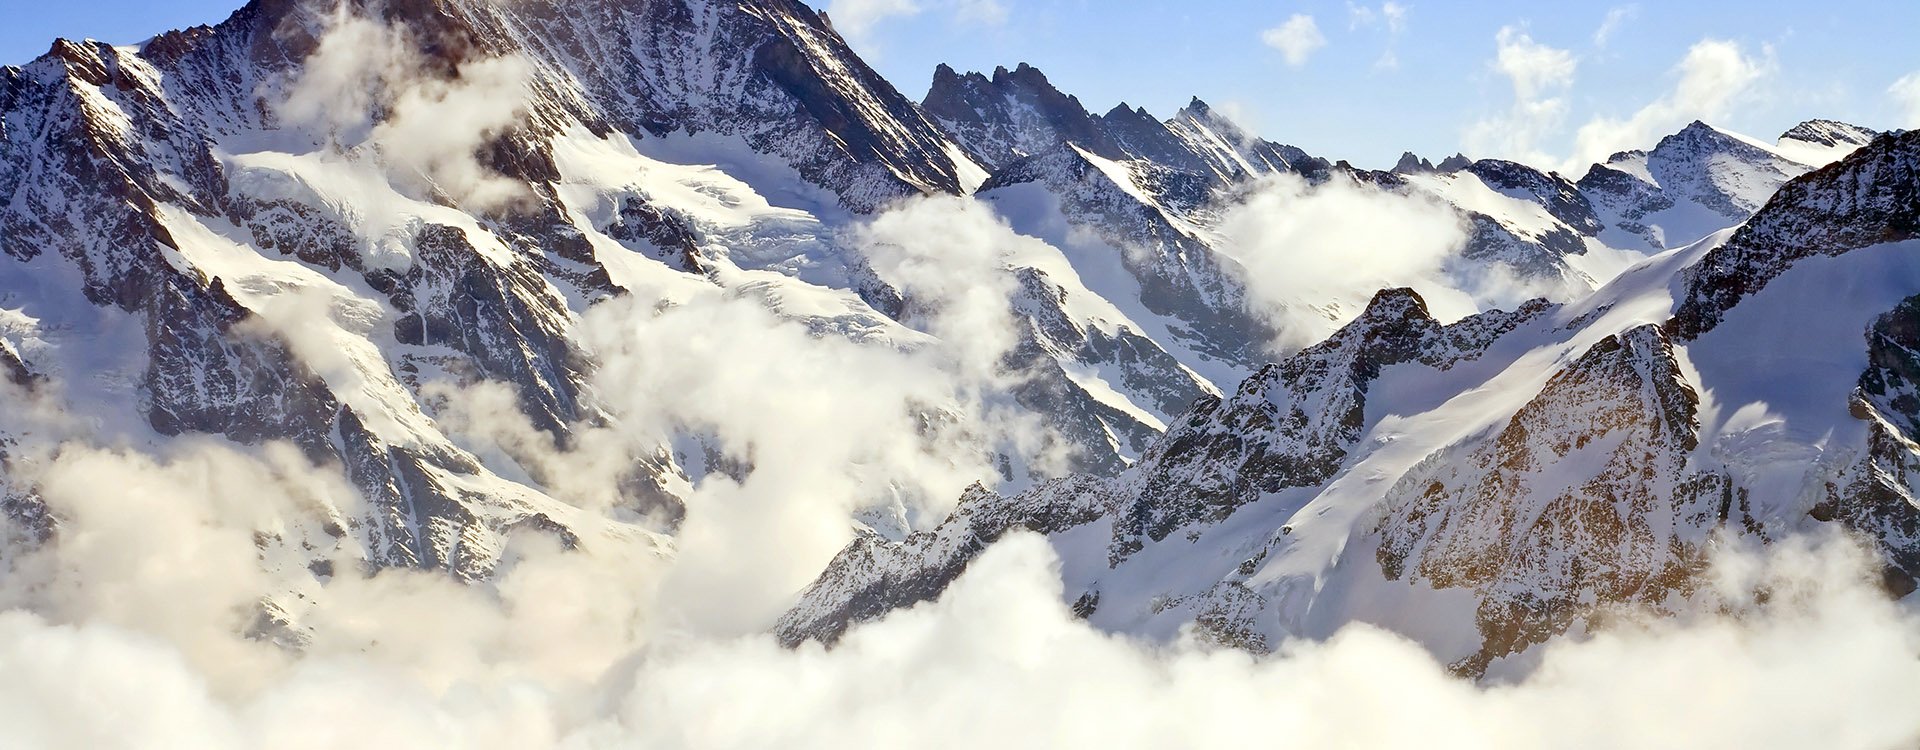 Landscape of Mist at Jungfraujoch, part of Swiss Alpine Alps at Interlaken Switzerland